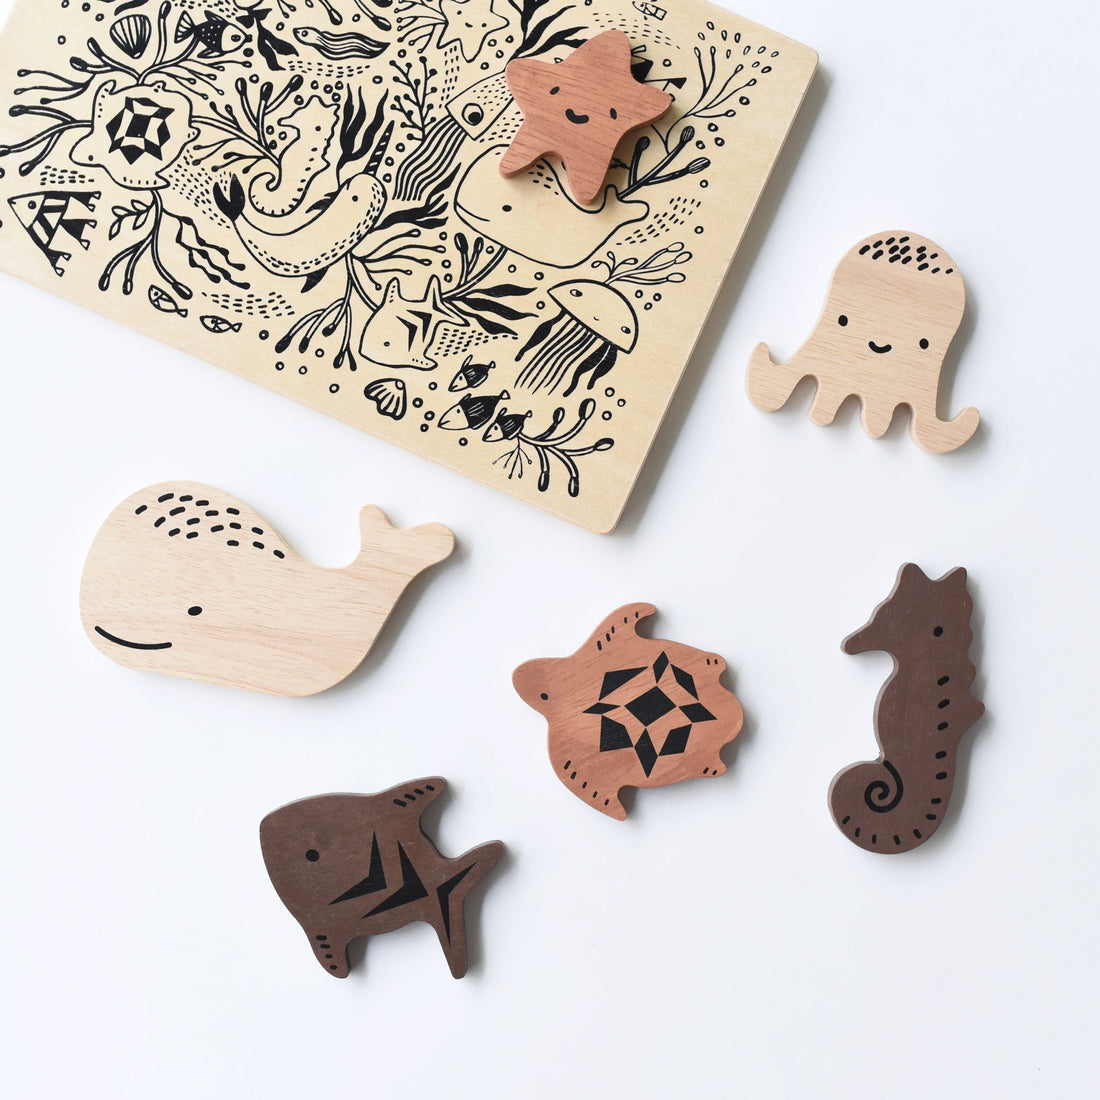 Wee Gallery - Wooden Tray Puzzle - Ocean Animals - Laadlee